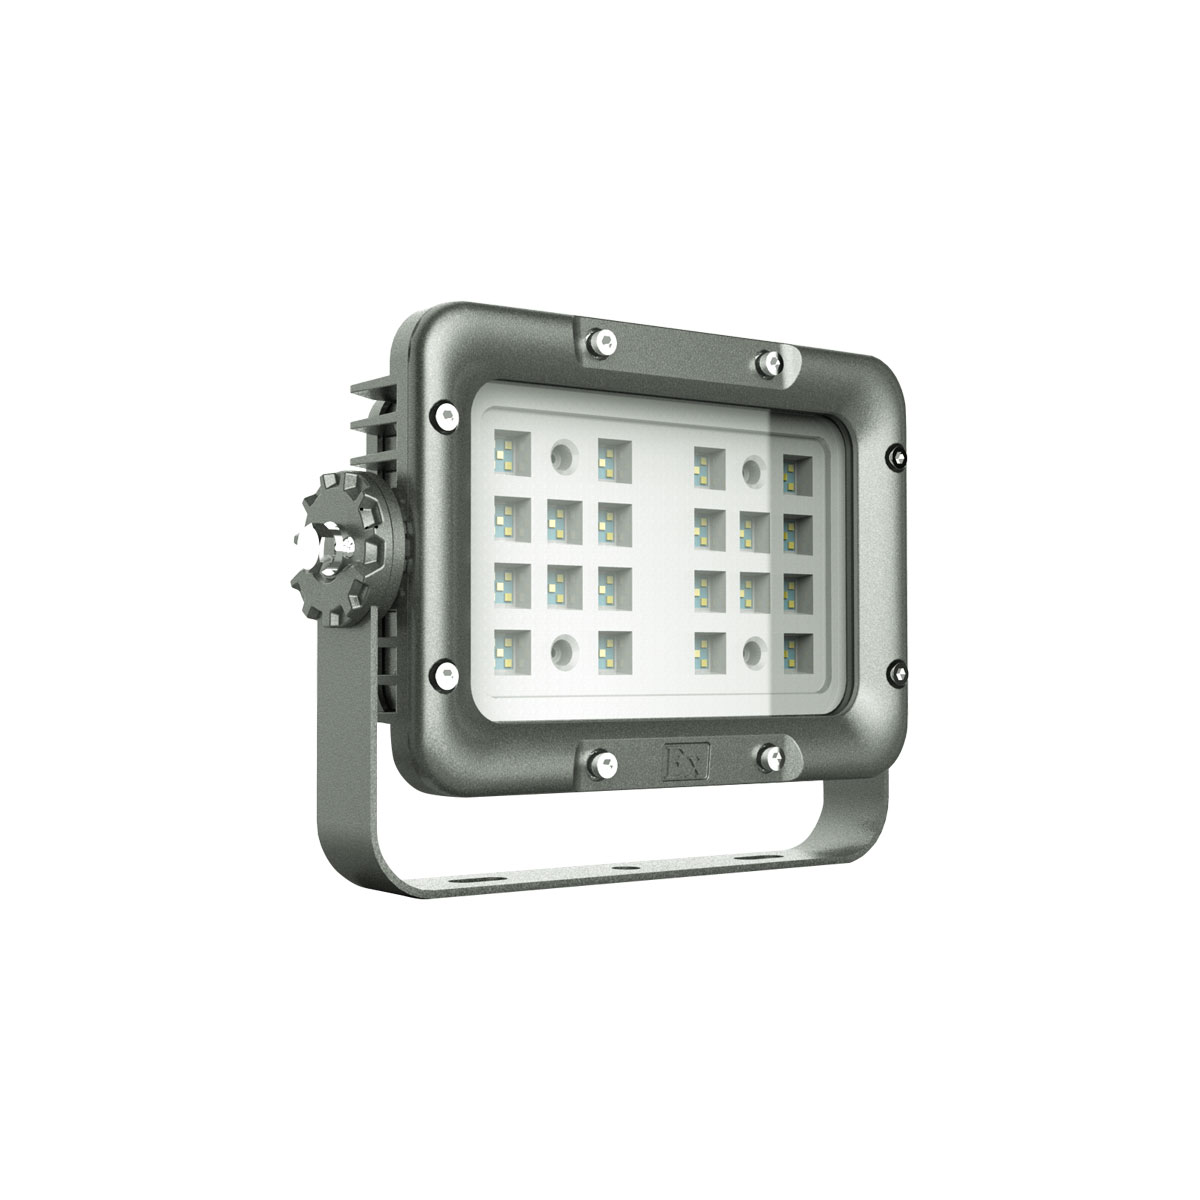 Proiector LED ANTIEX Secom ATEX40 70W cu kit de emergenta 1h zona 1/21 lumina rece IP66